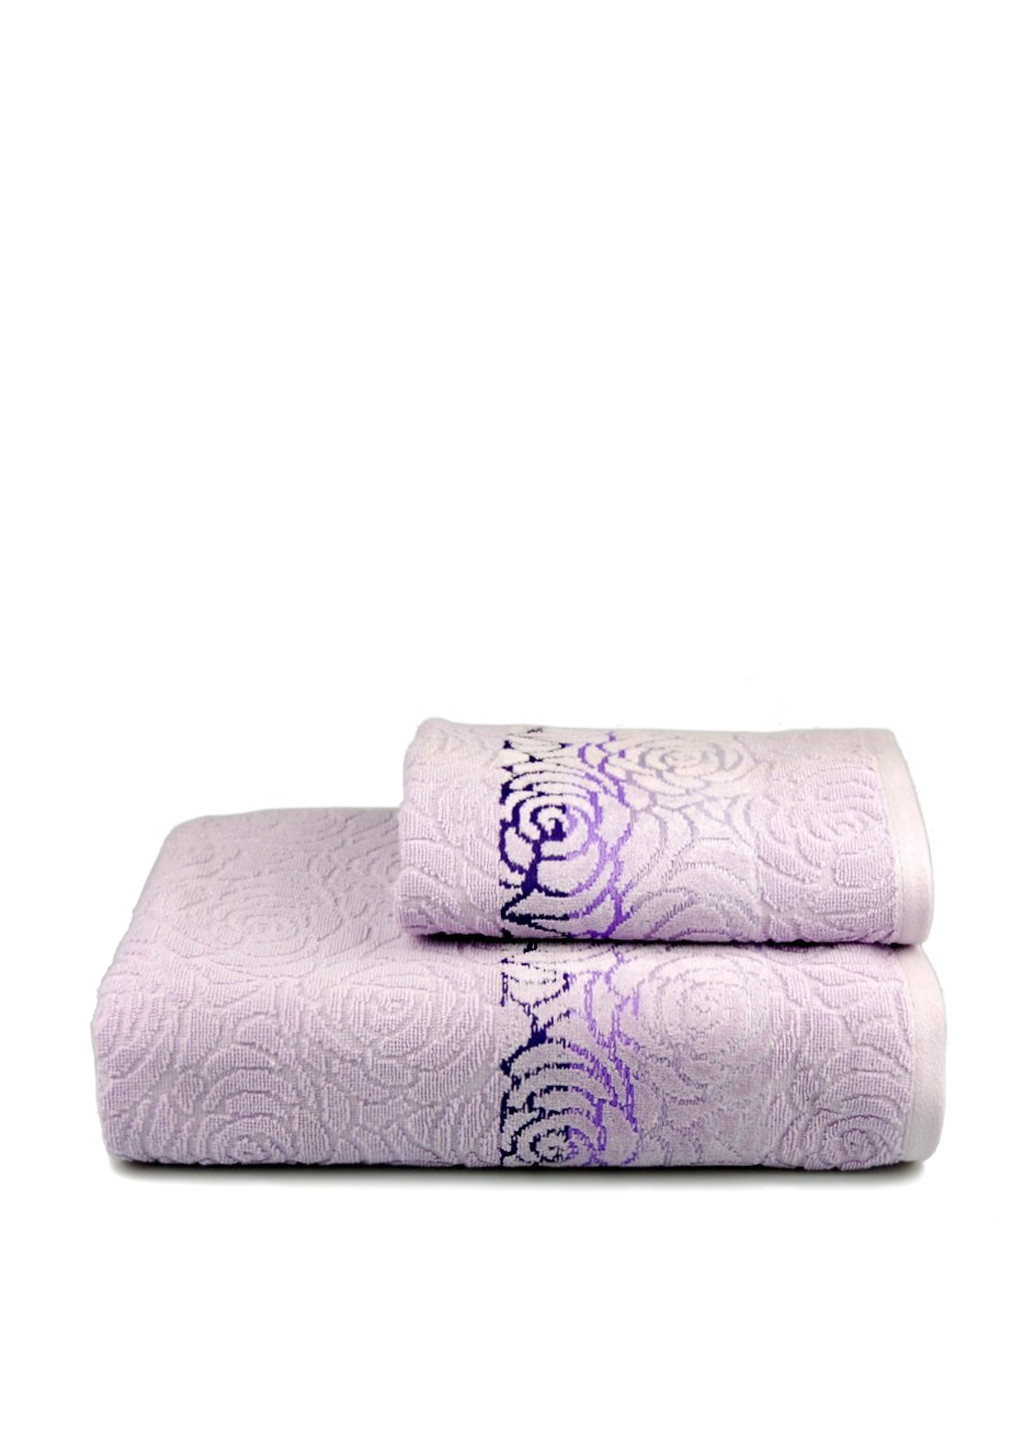 Home Line полотенце, 50х90 см рисунок сиреневый производство - Турция